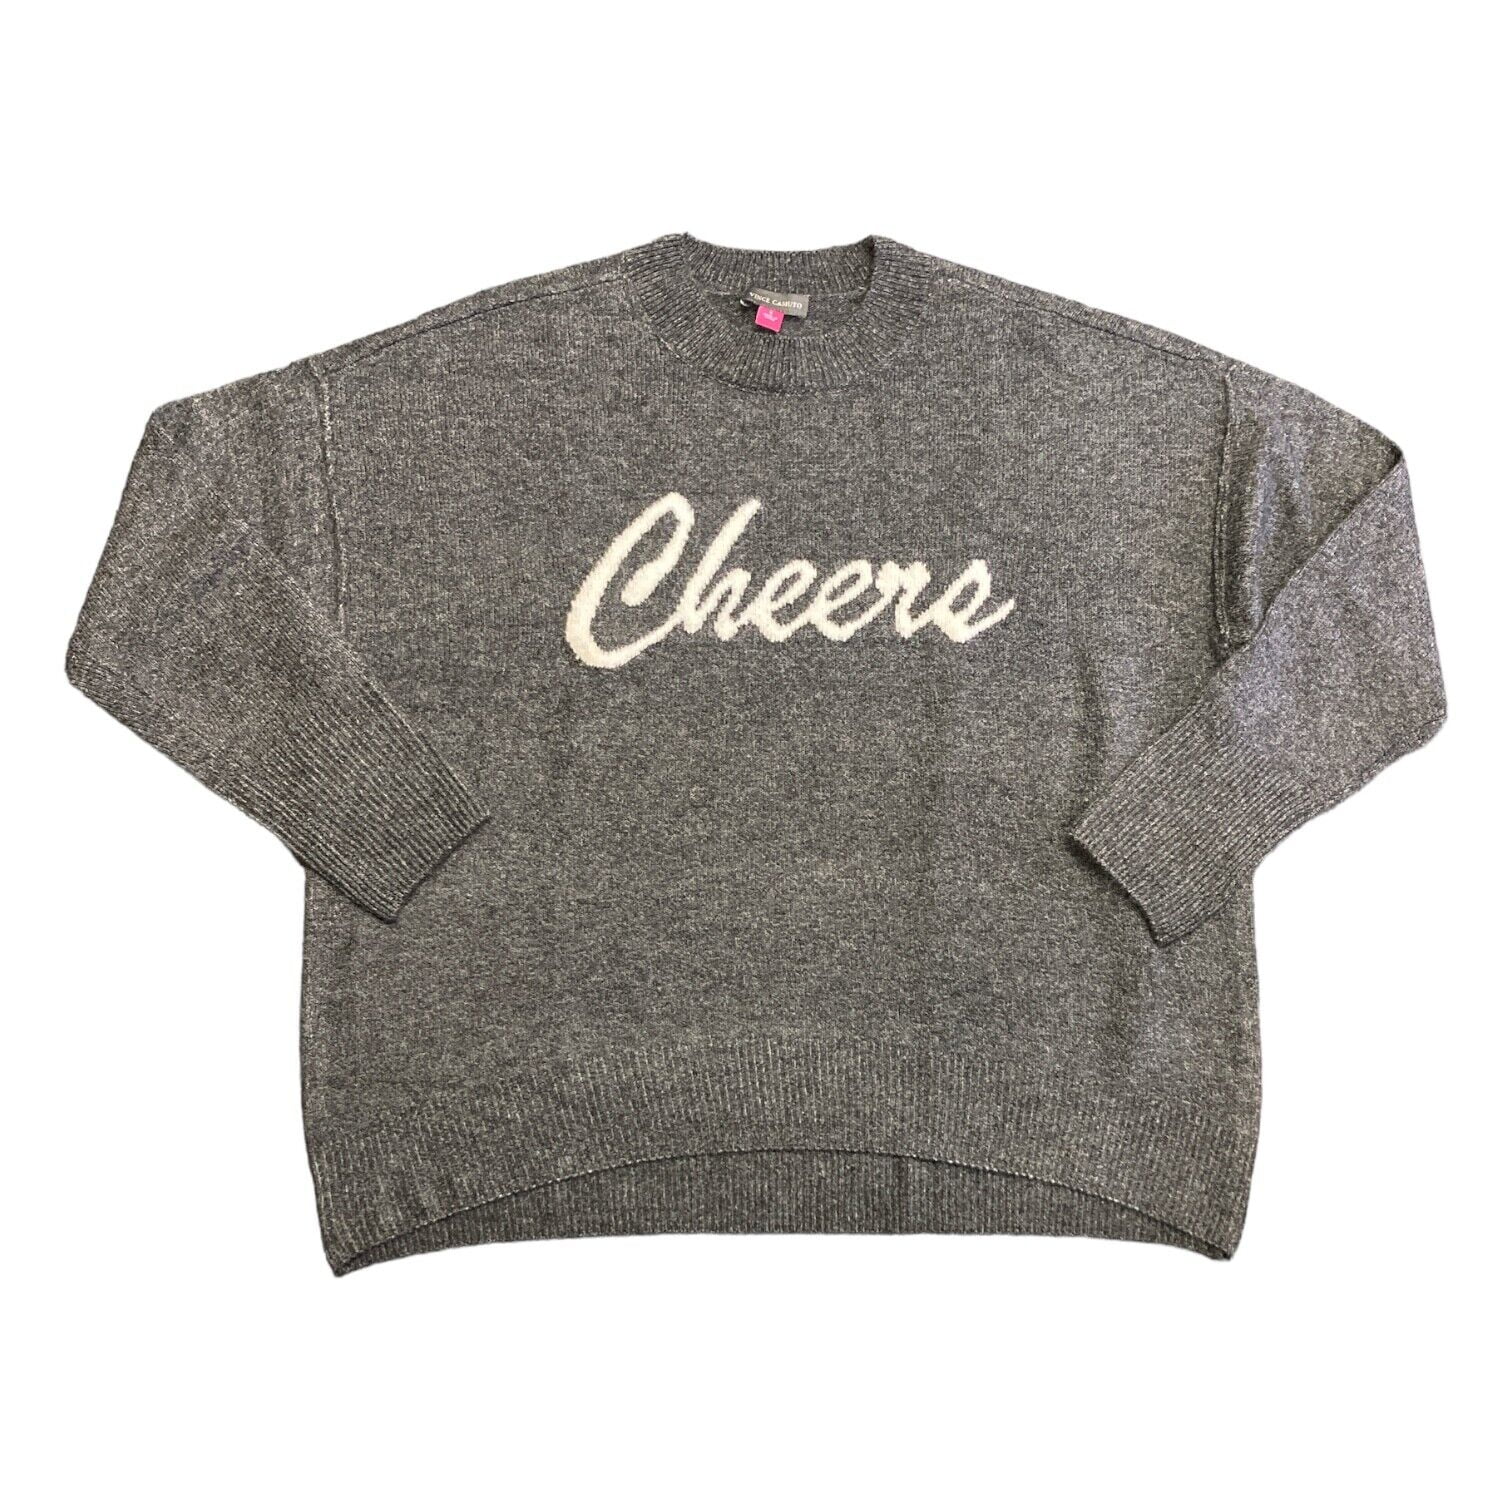 Vince Camuto Women's Long Sleeve Crewneck Holiday Sweater (Medium Heather  Grey Cheers, S)